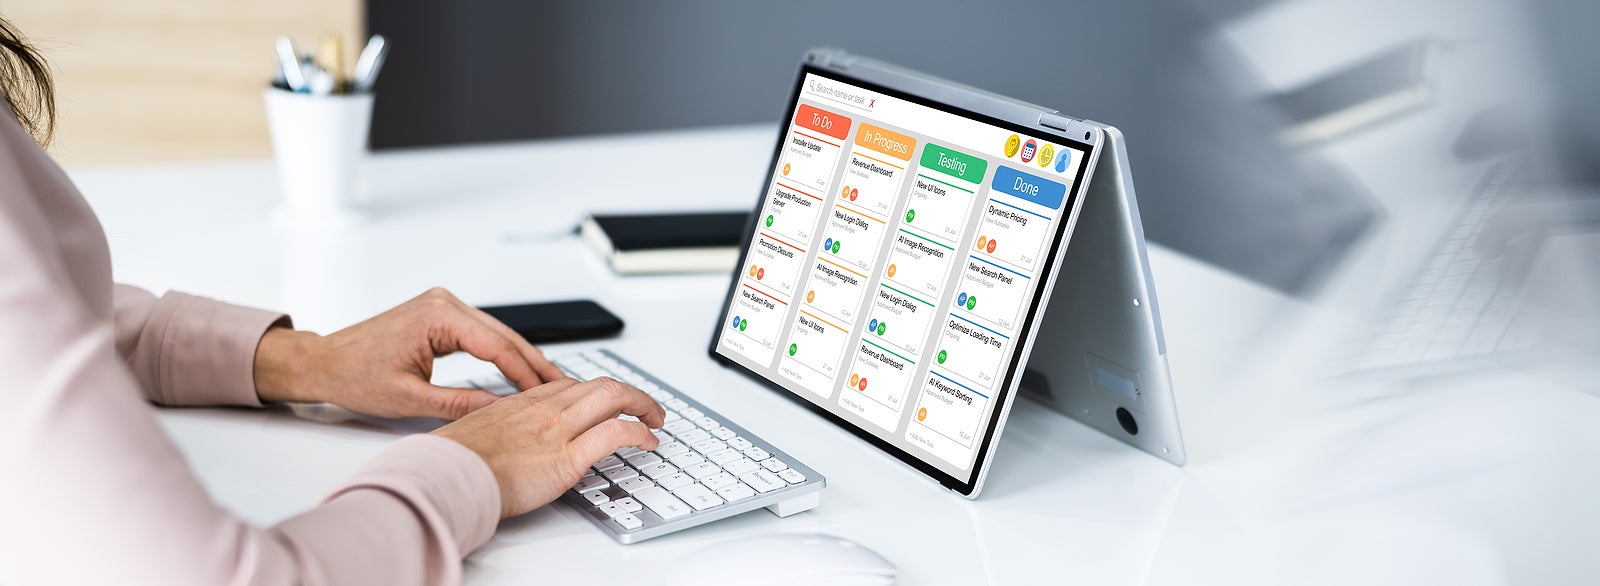 Kanban Project Schedule Management Software App On Laptop